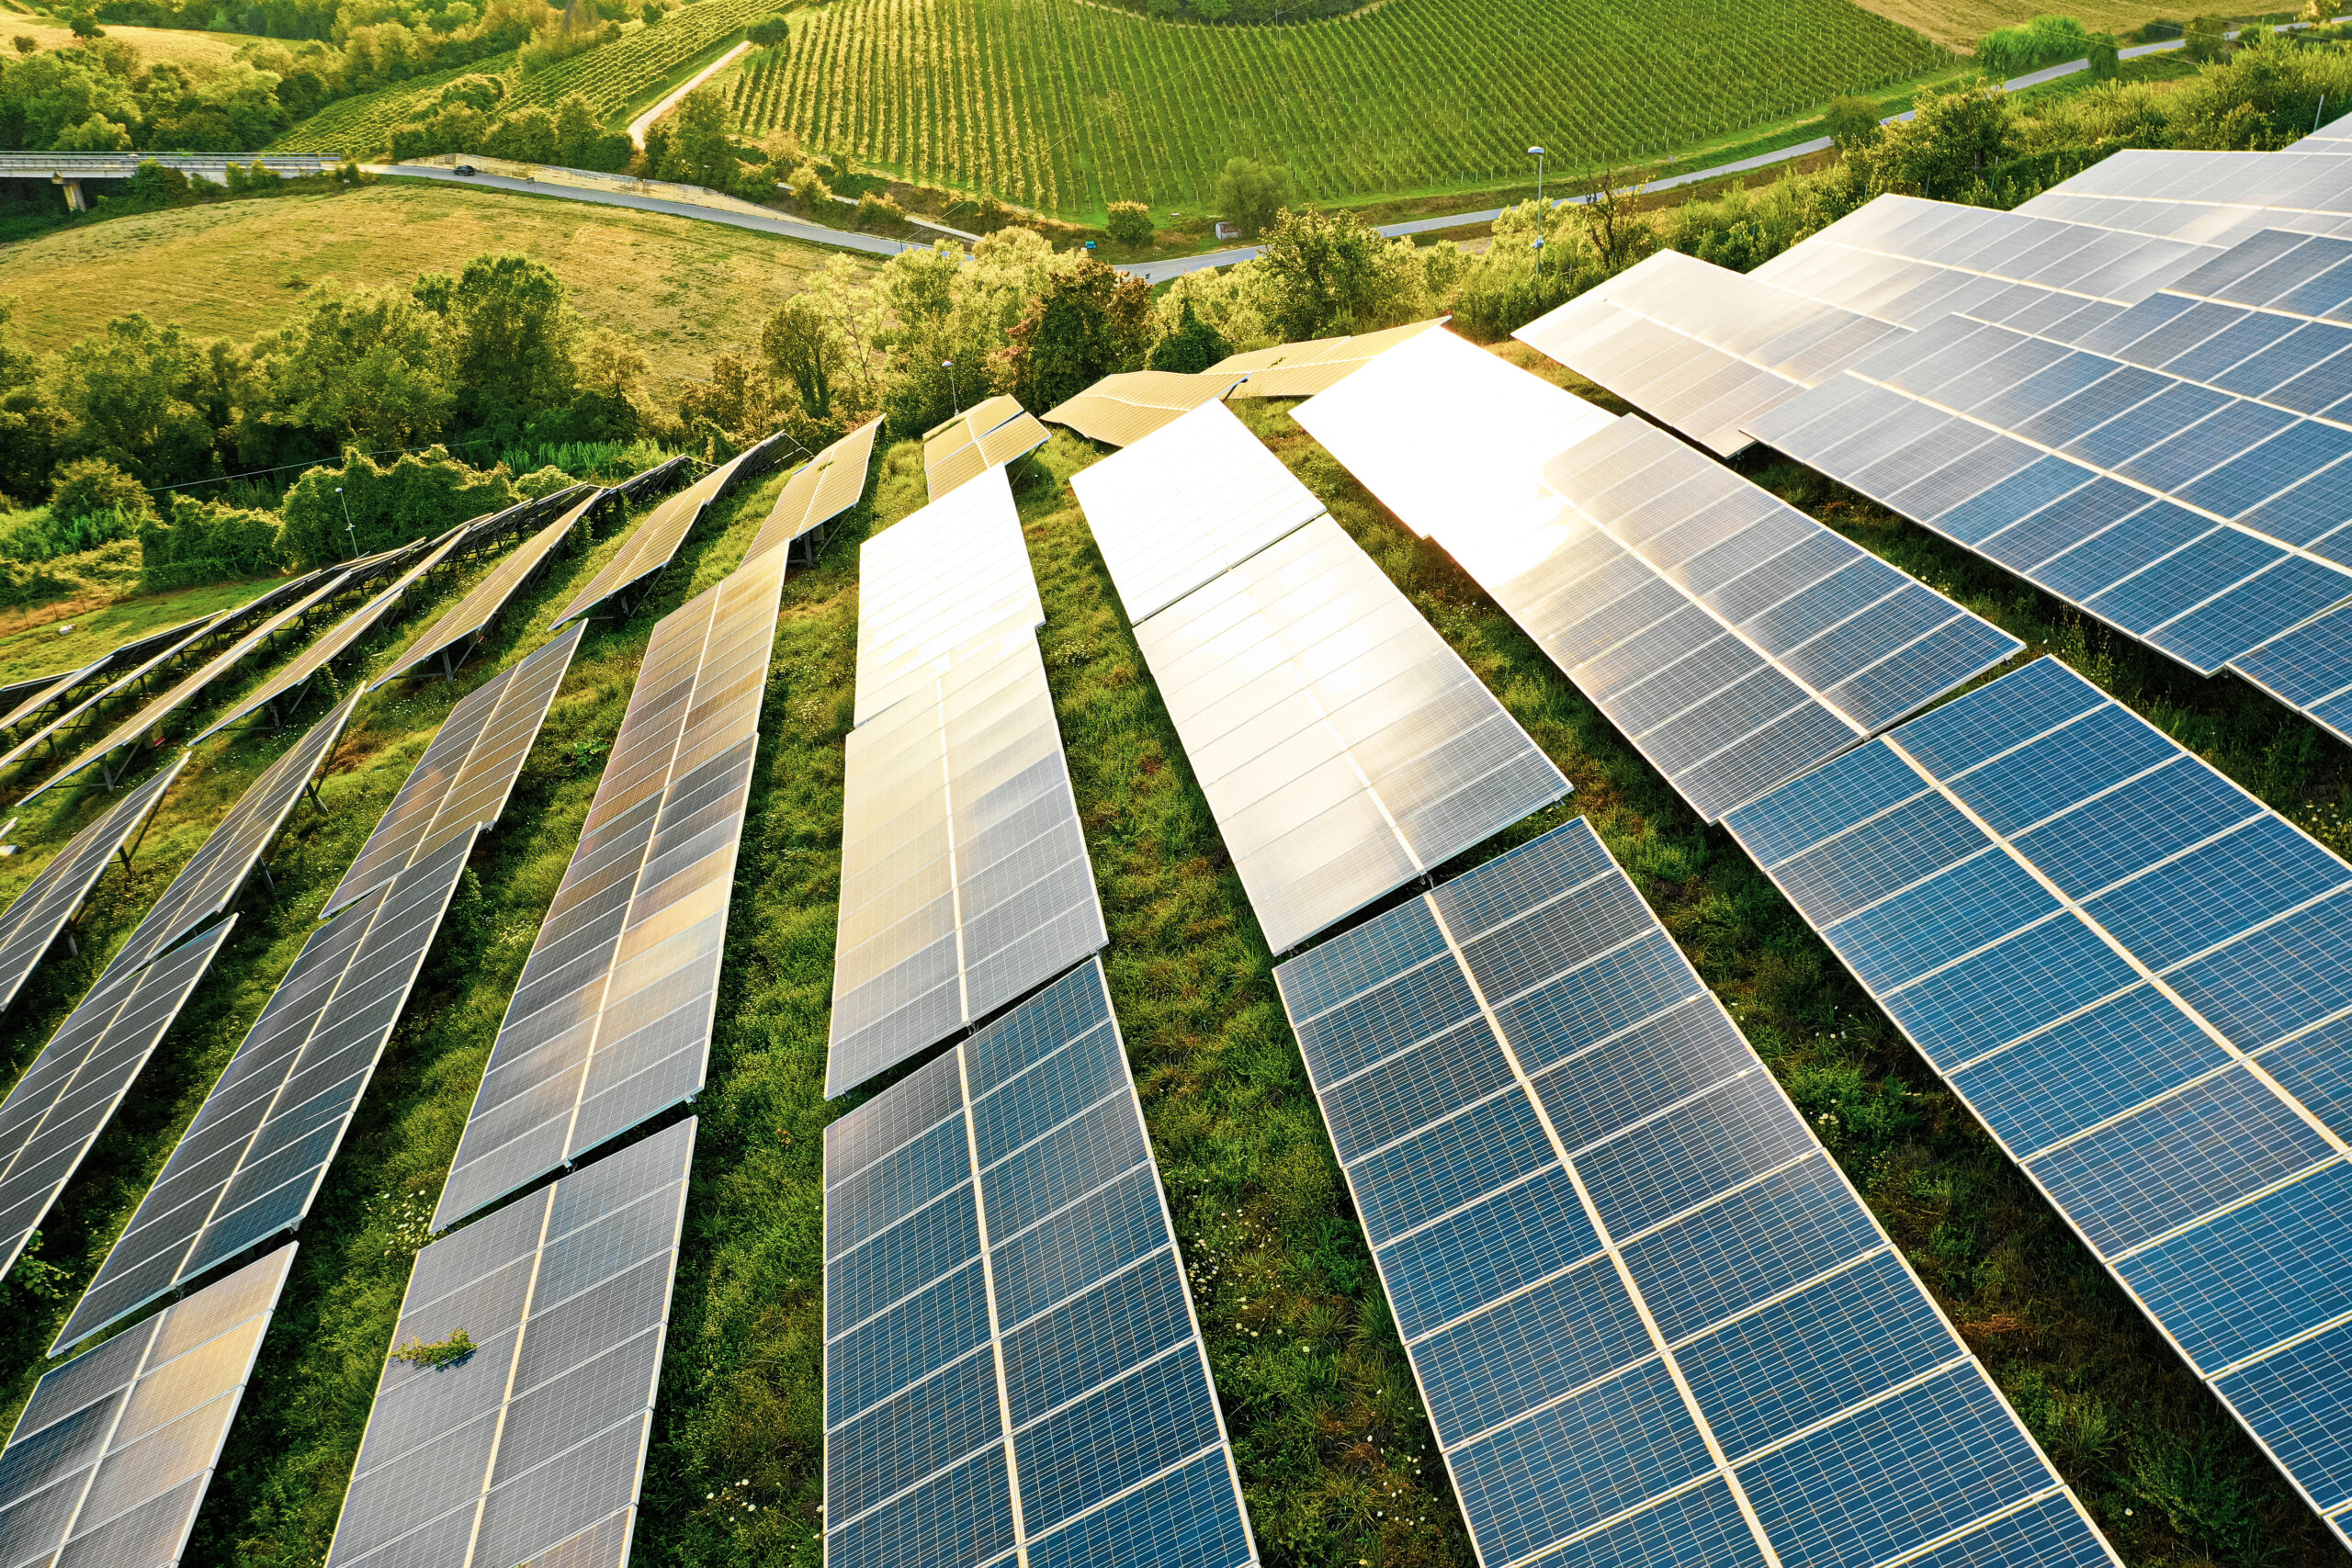 Solar panels fields on the green hills.